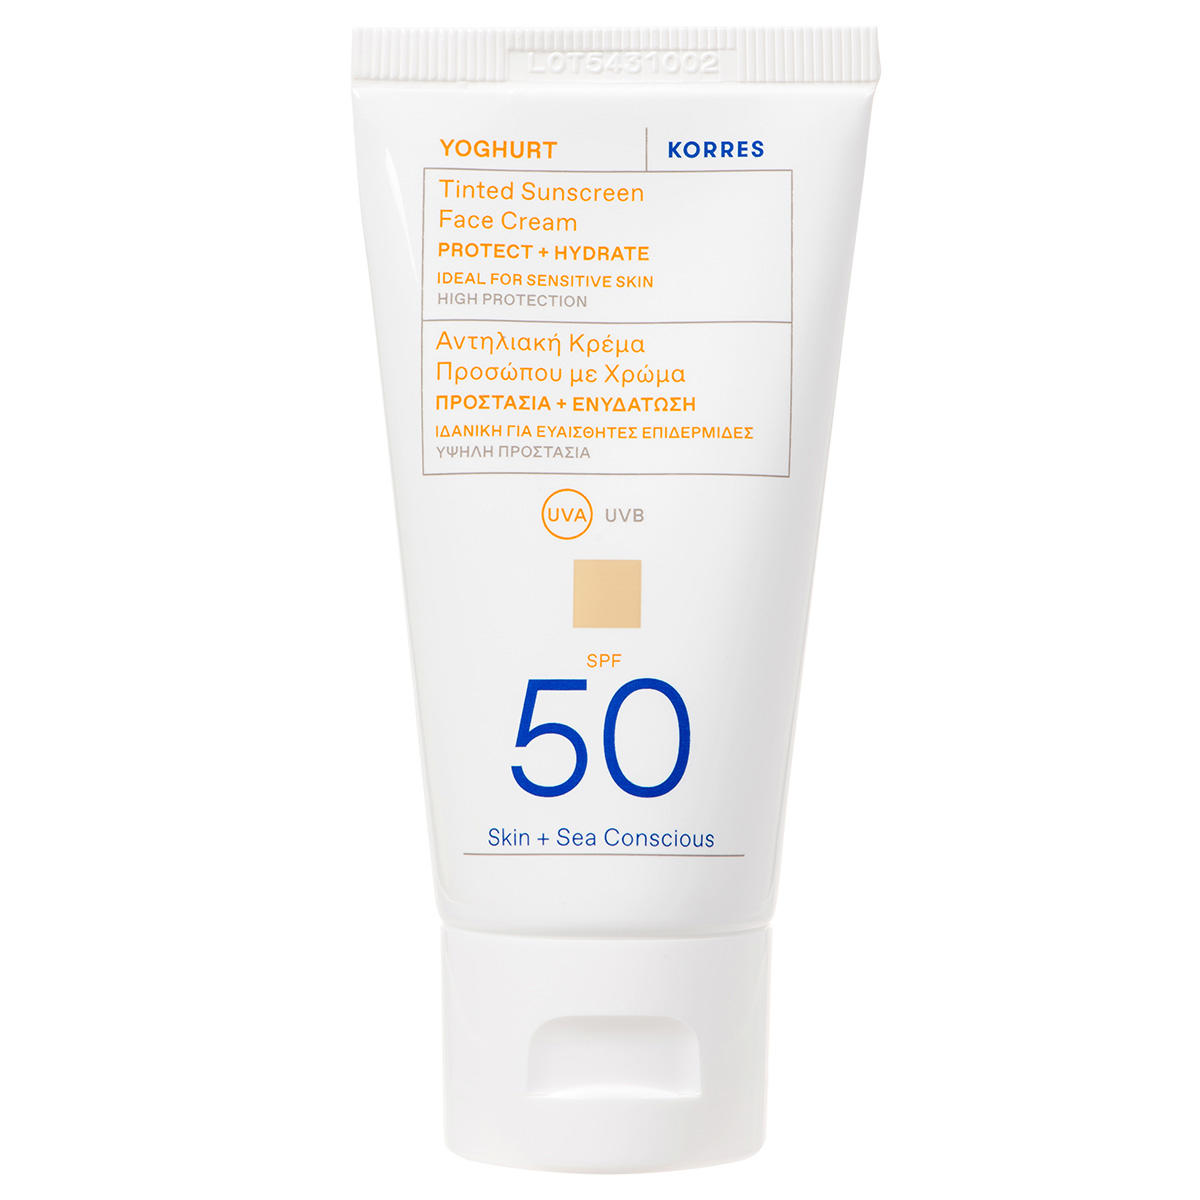 KORRES Yoghurt Tinted Sunscreen Face Cream SPF 50 50 ml - 1